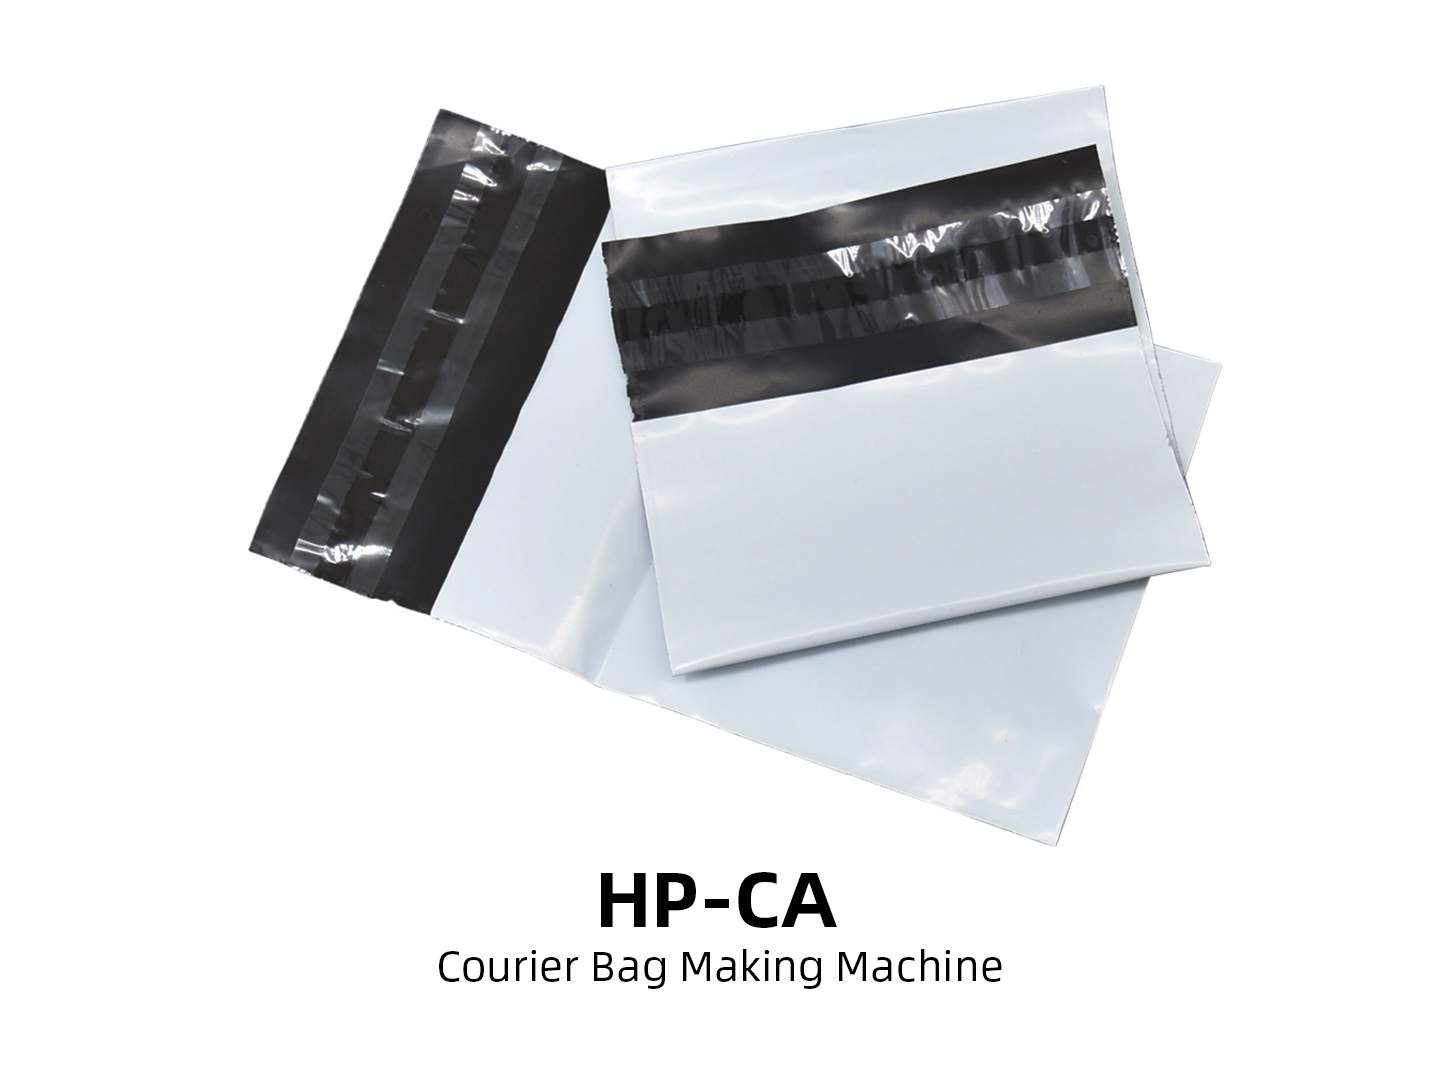 Courier bag making machine.jpg